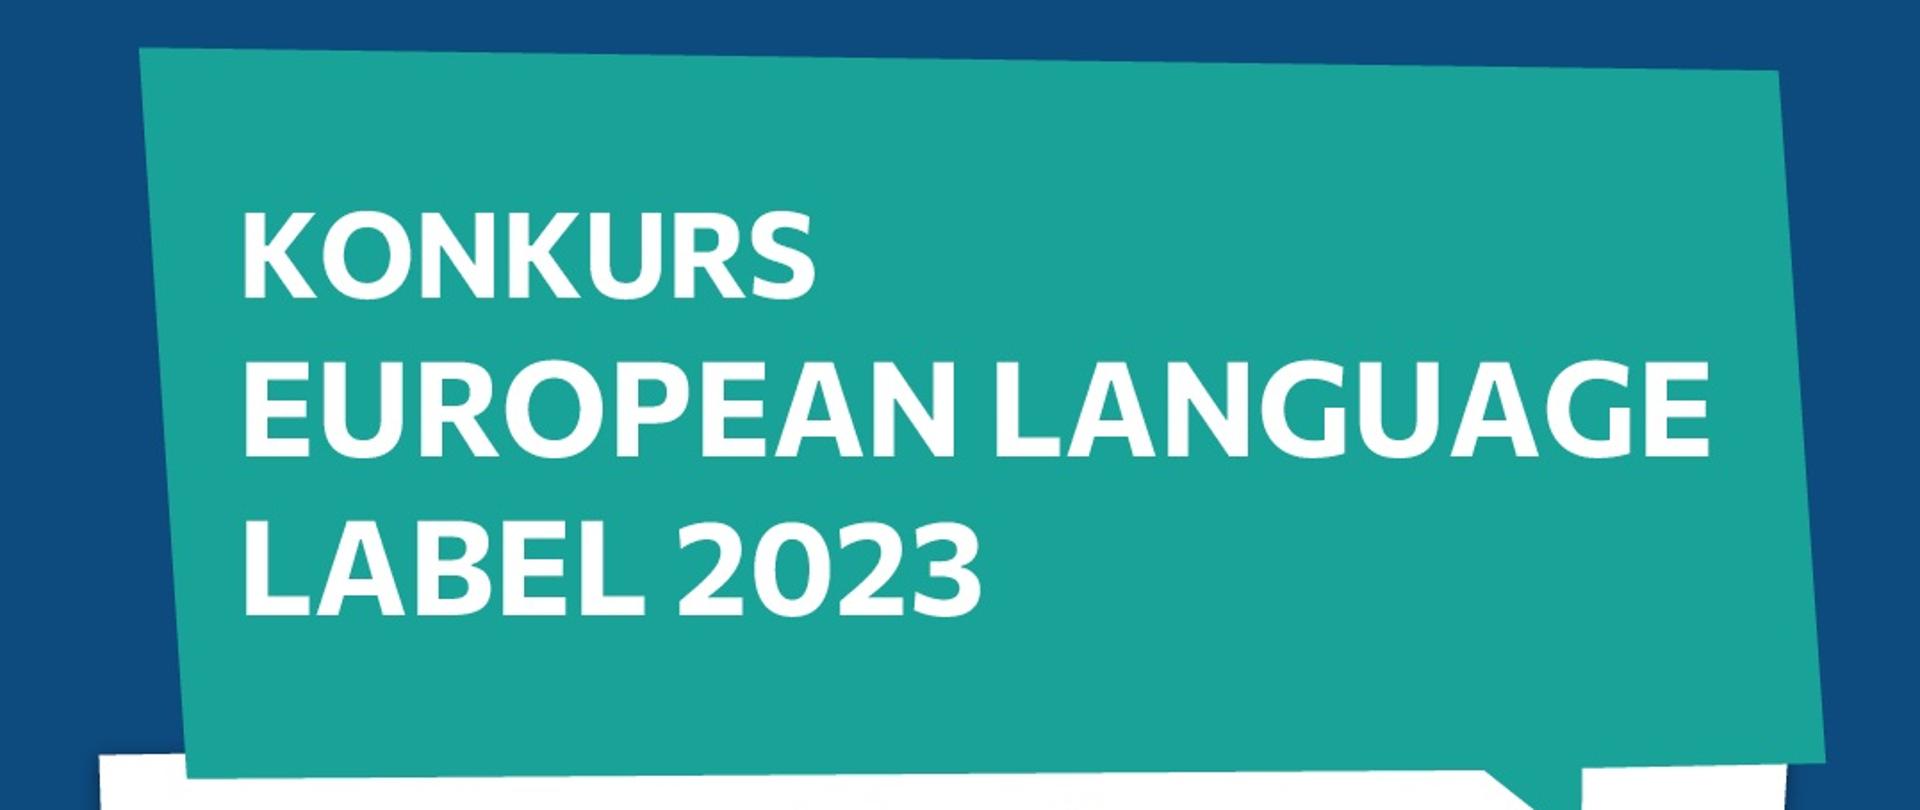 Grafika - na zielonym tle biały napis Konkurs European Language Label 2023.